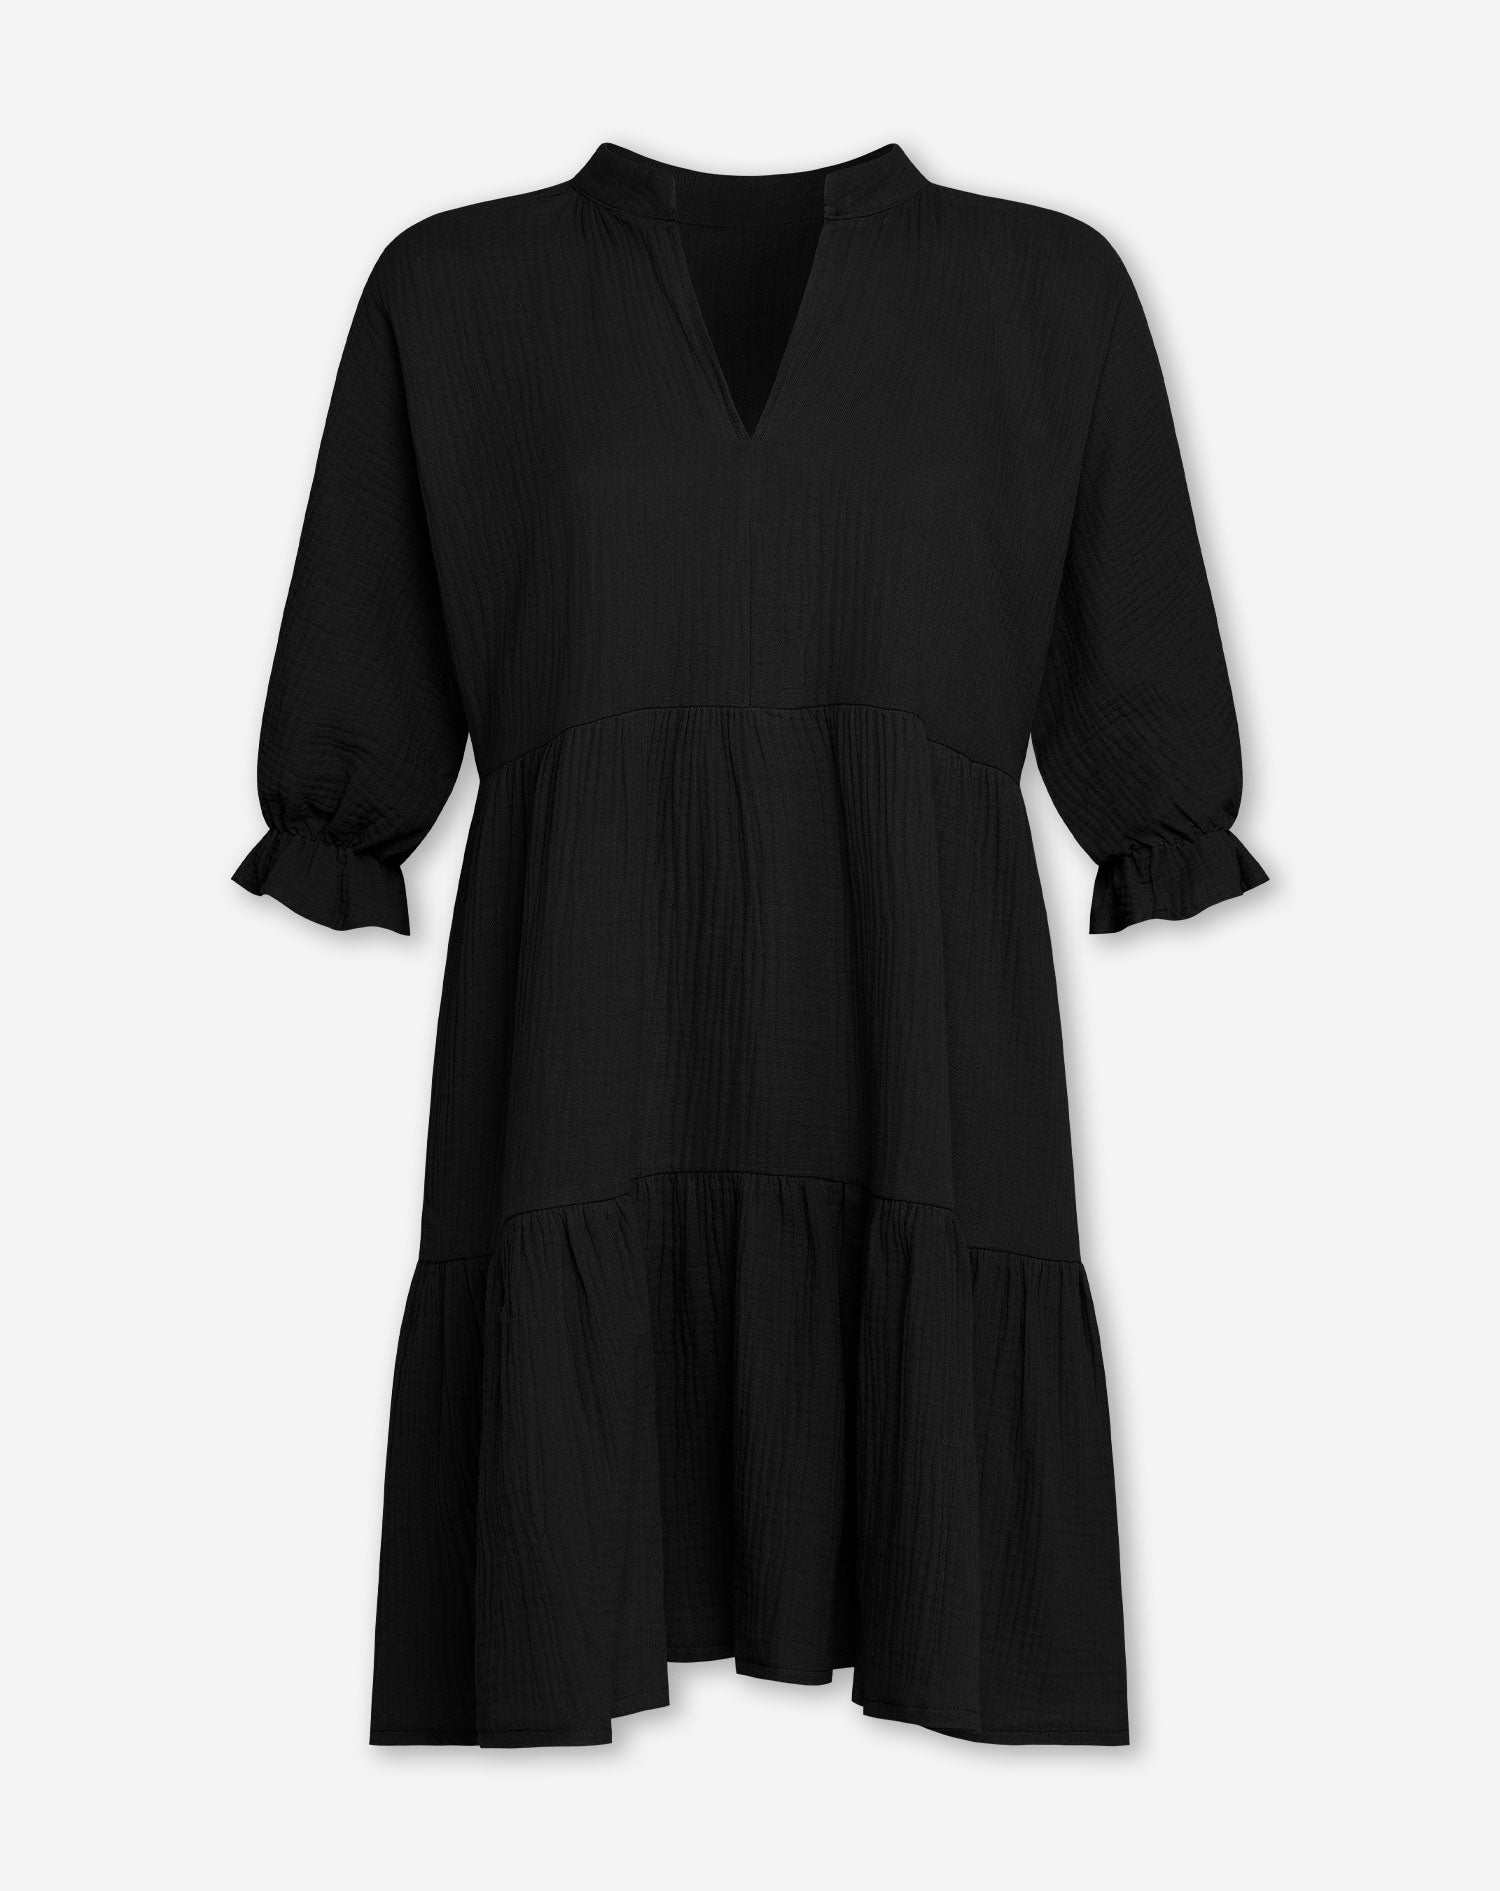 YUNA MOUSSELINE LAYER DRESS BLACK